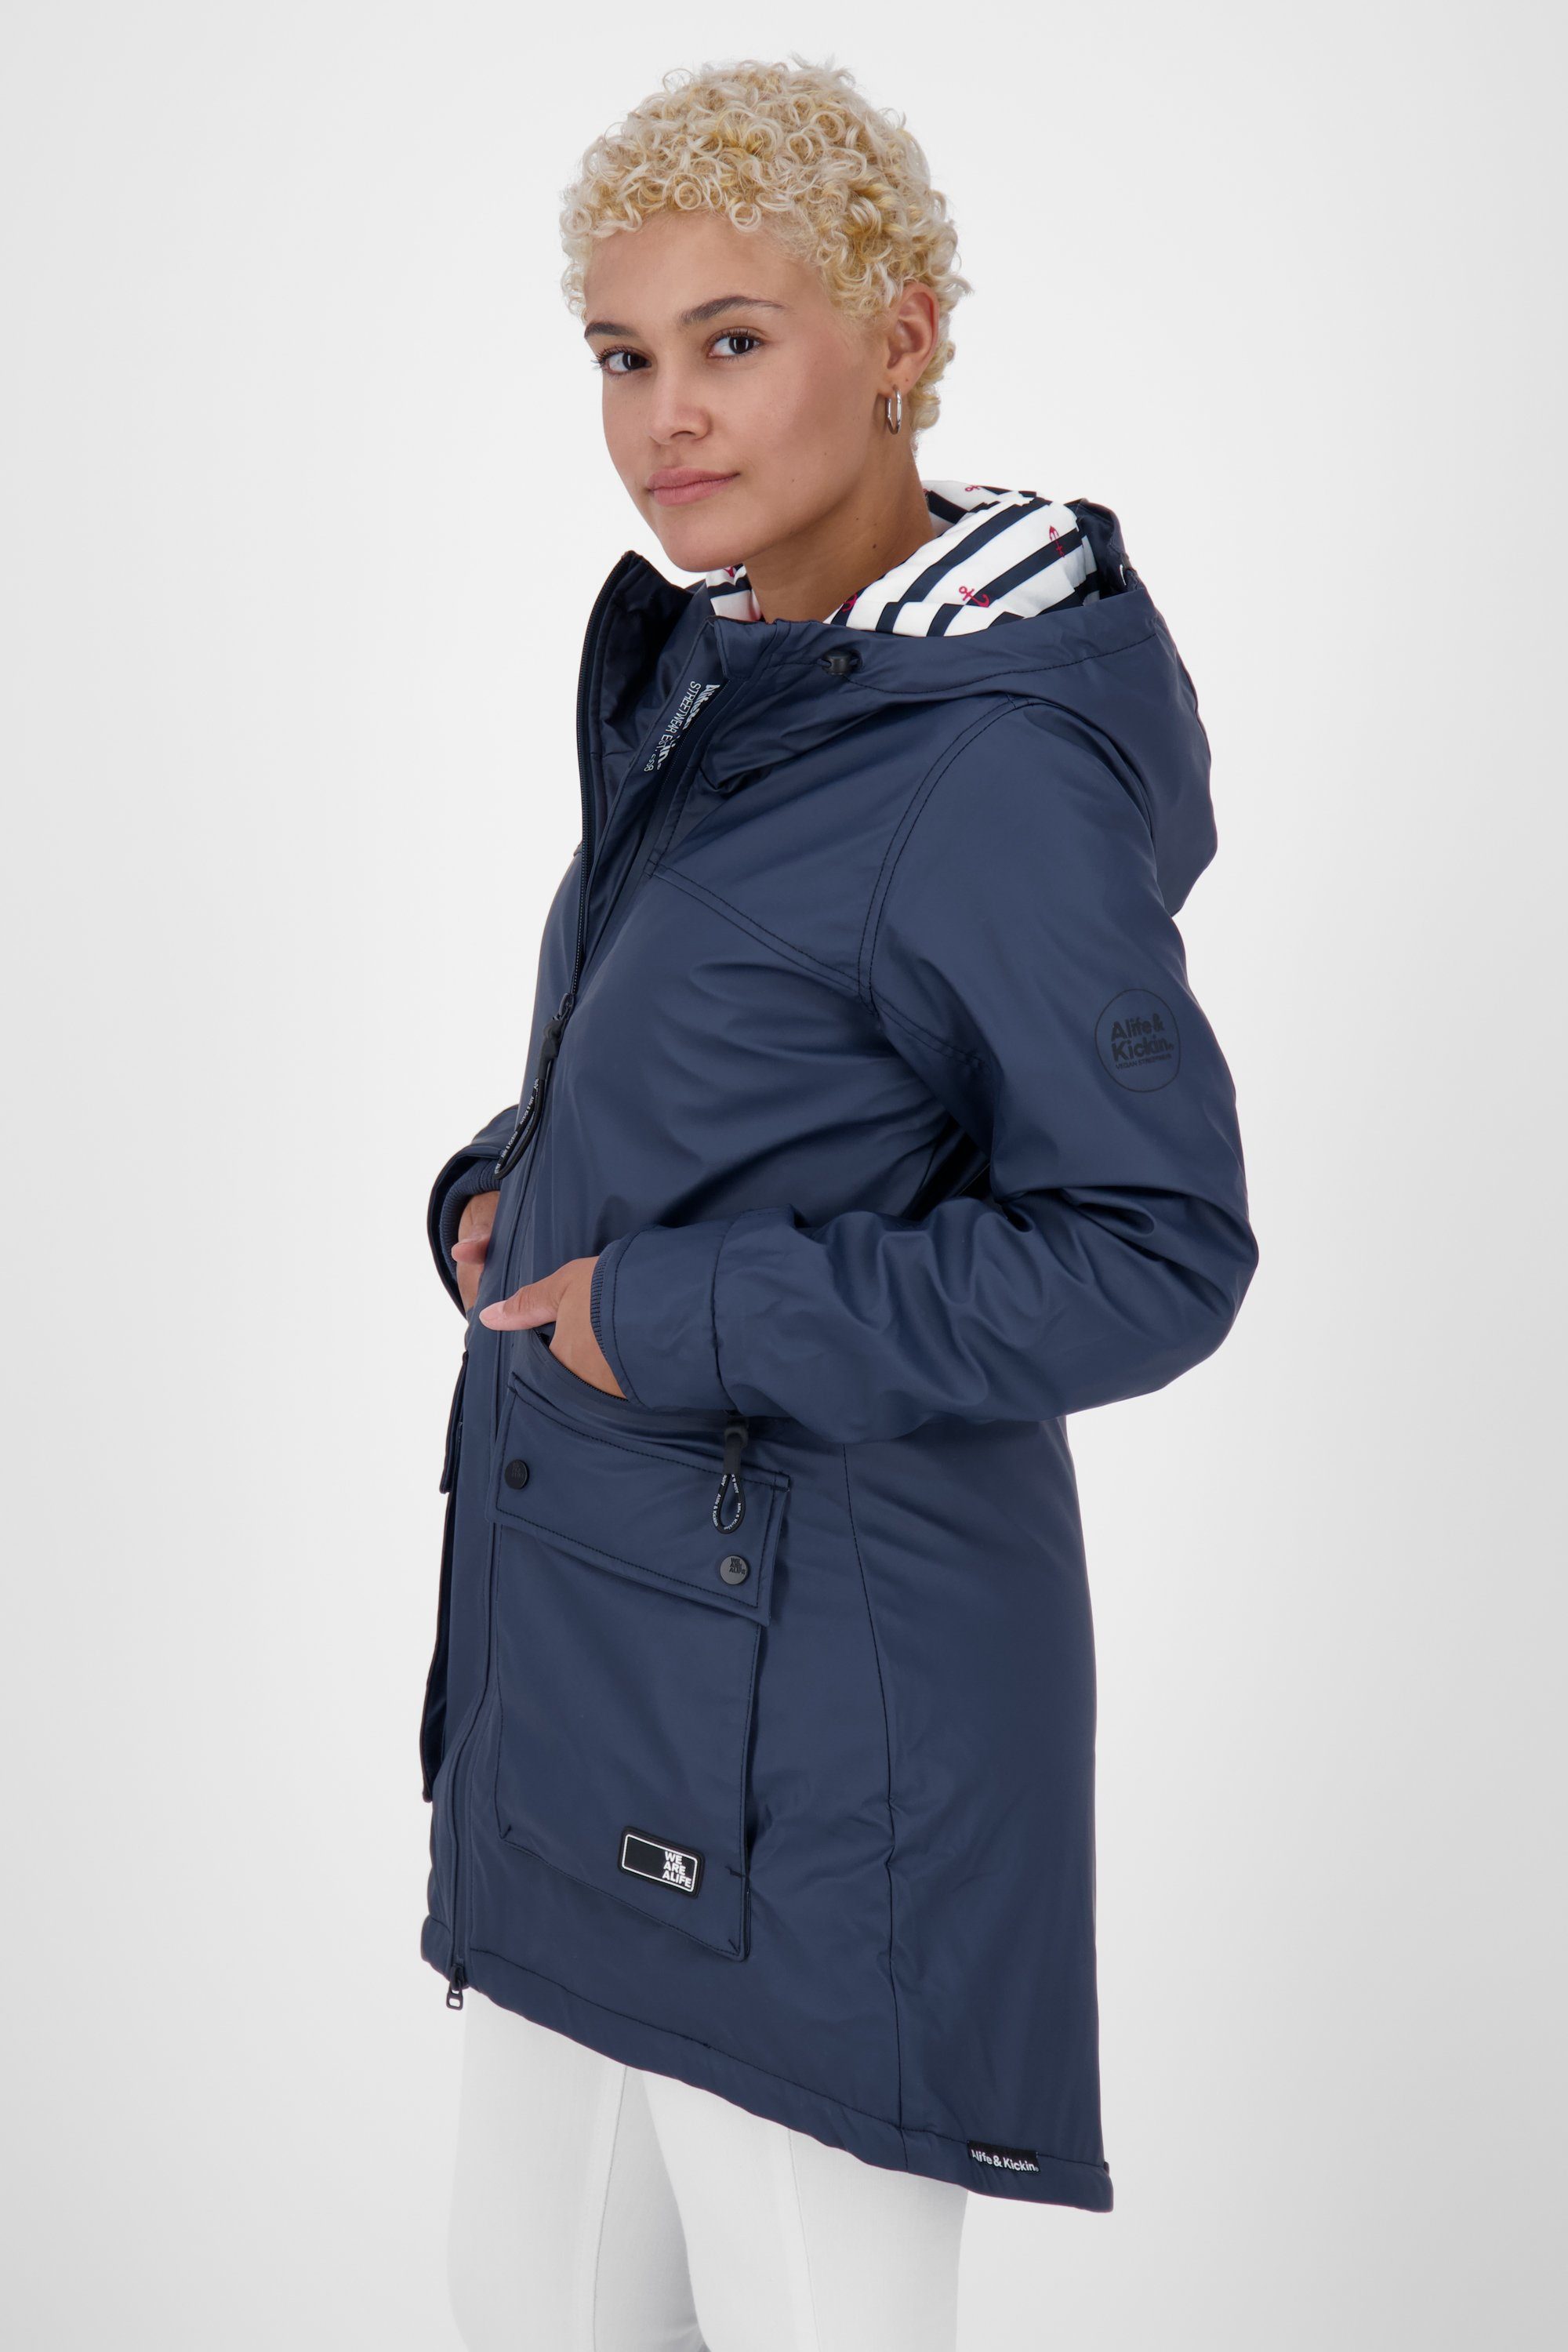 Übergangsjacke Coat Kickin Rainstyle marine Damen Alife A Langjacke, AudreyAK Langjacke &